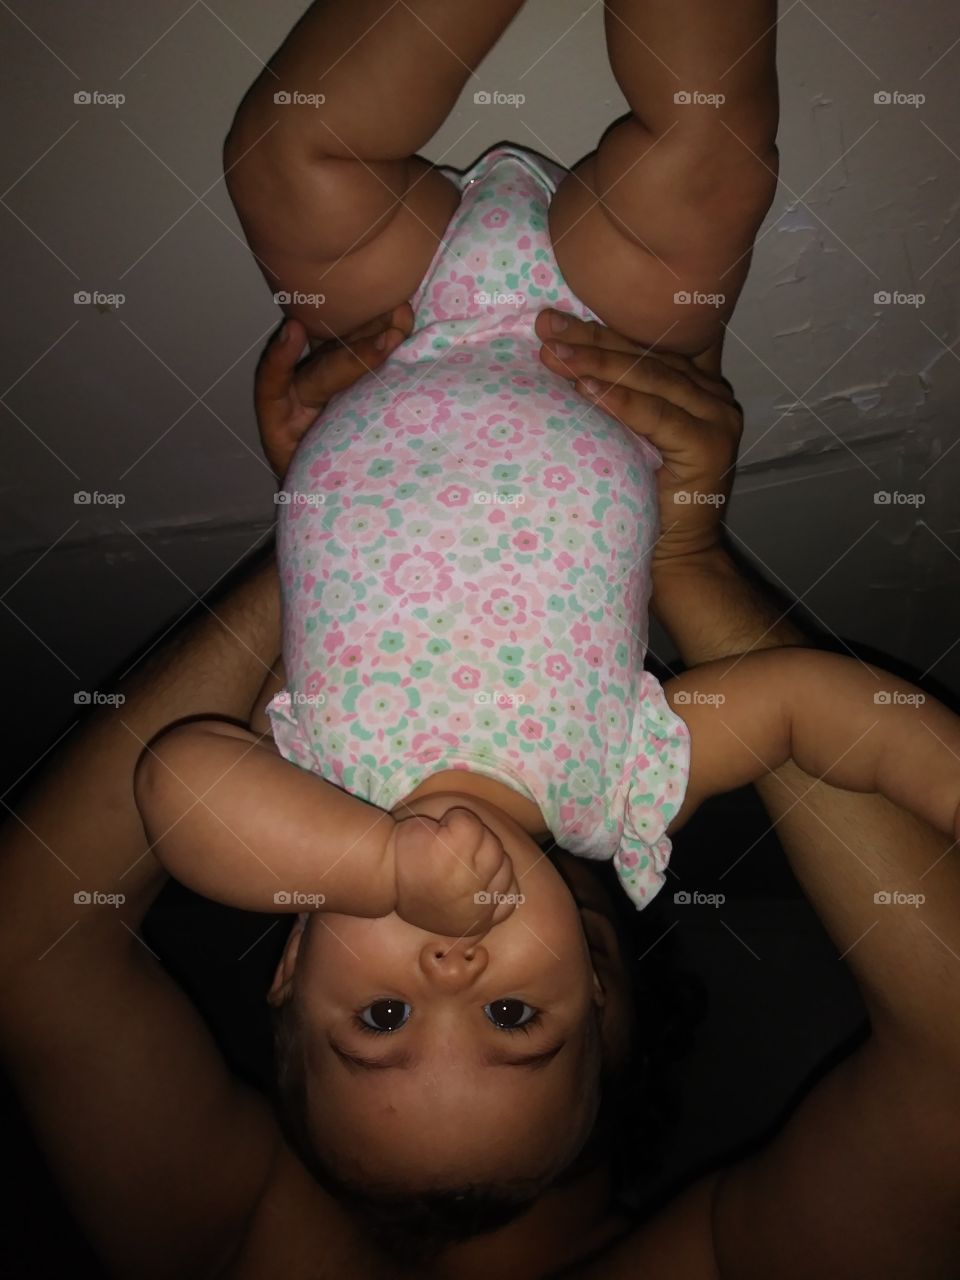 Upside down baby